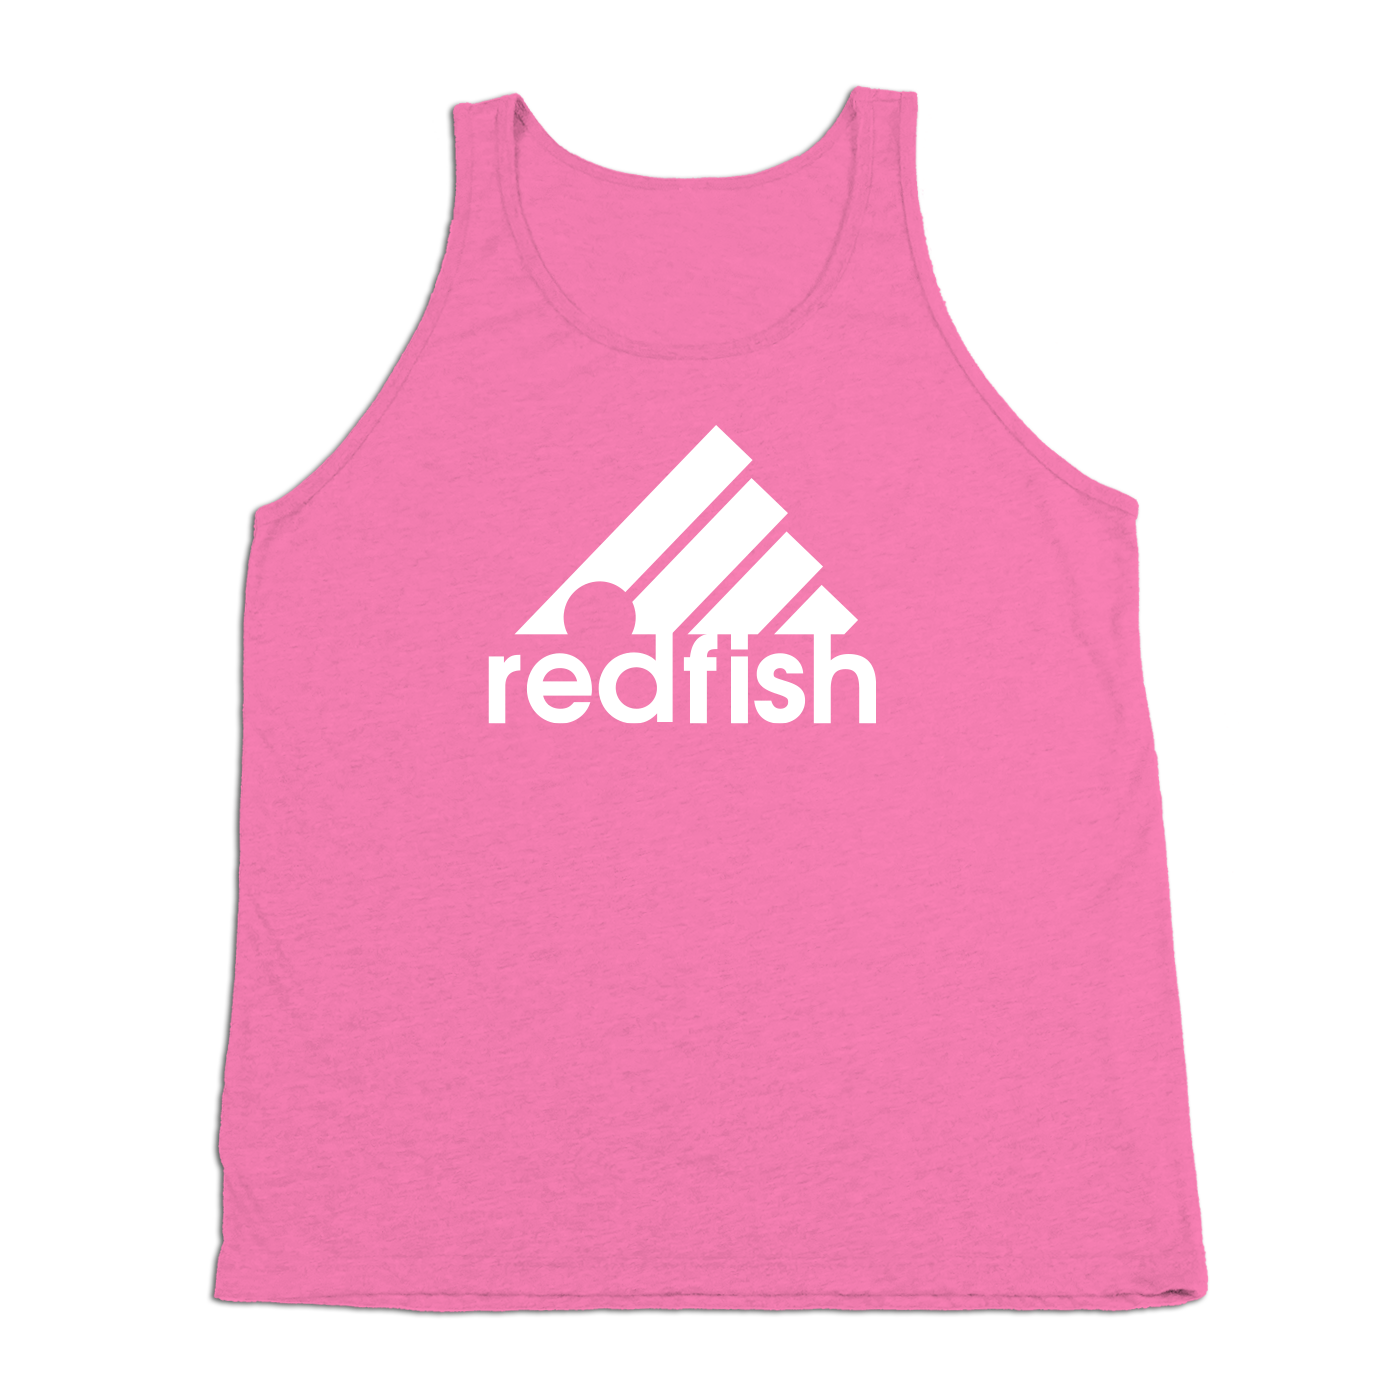 #REDFISH TriBlend Tank Top - Hat Mount for GoPro